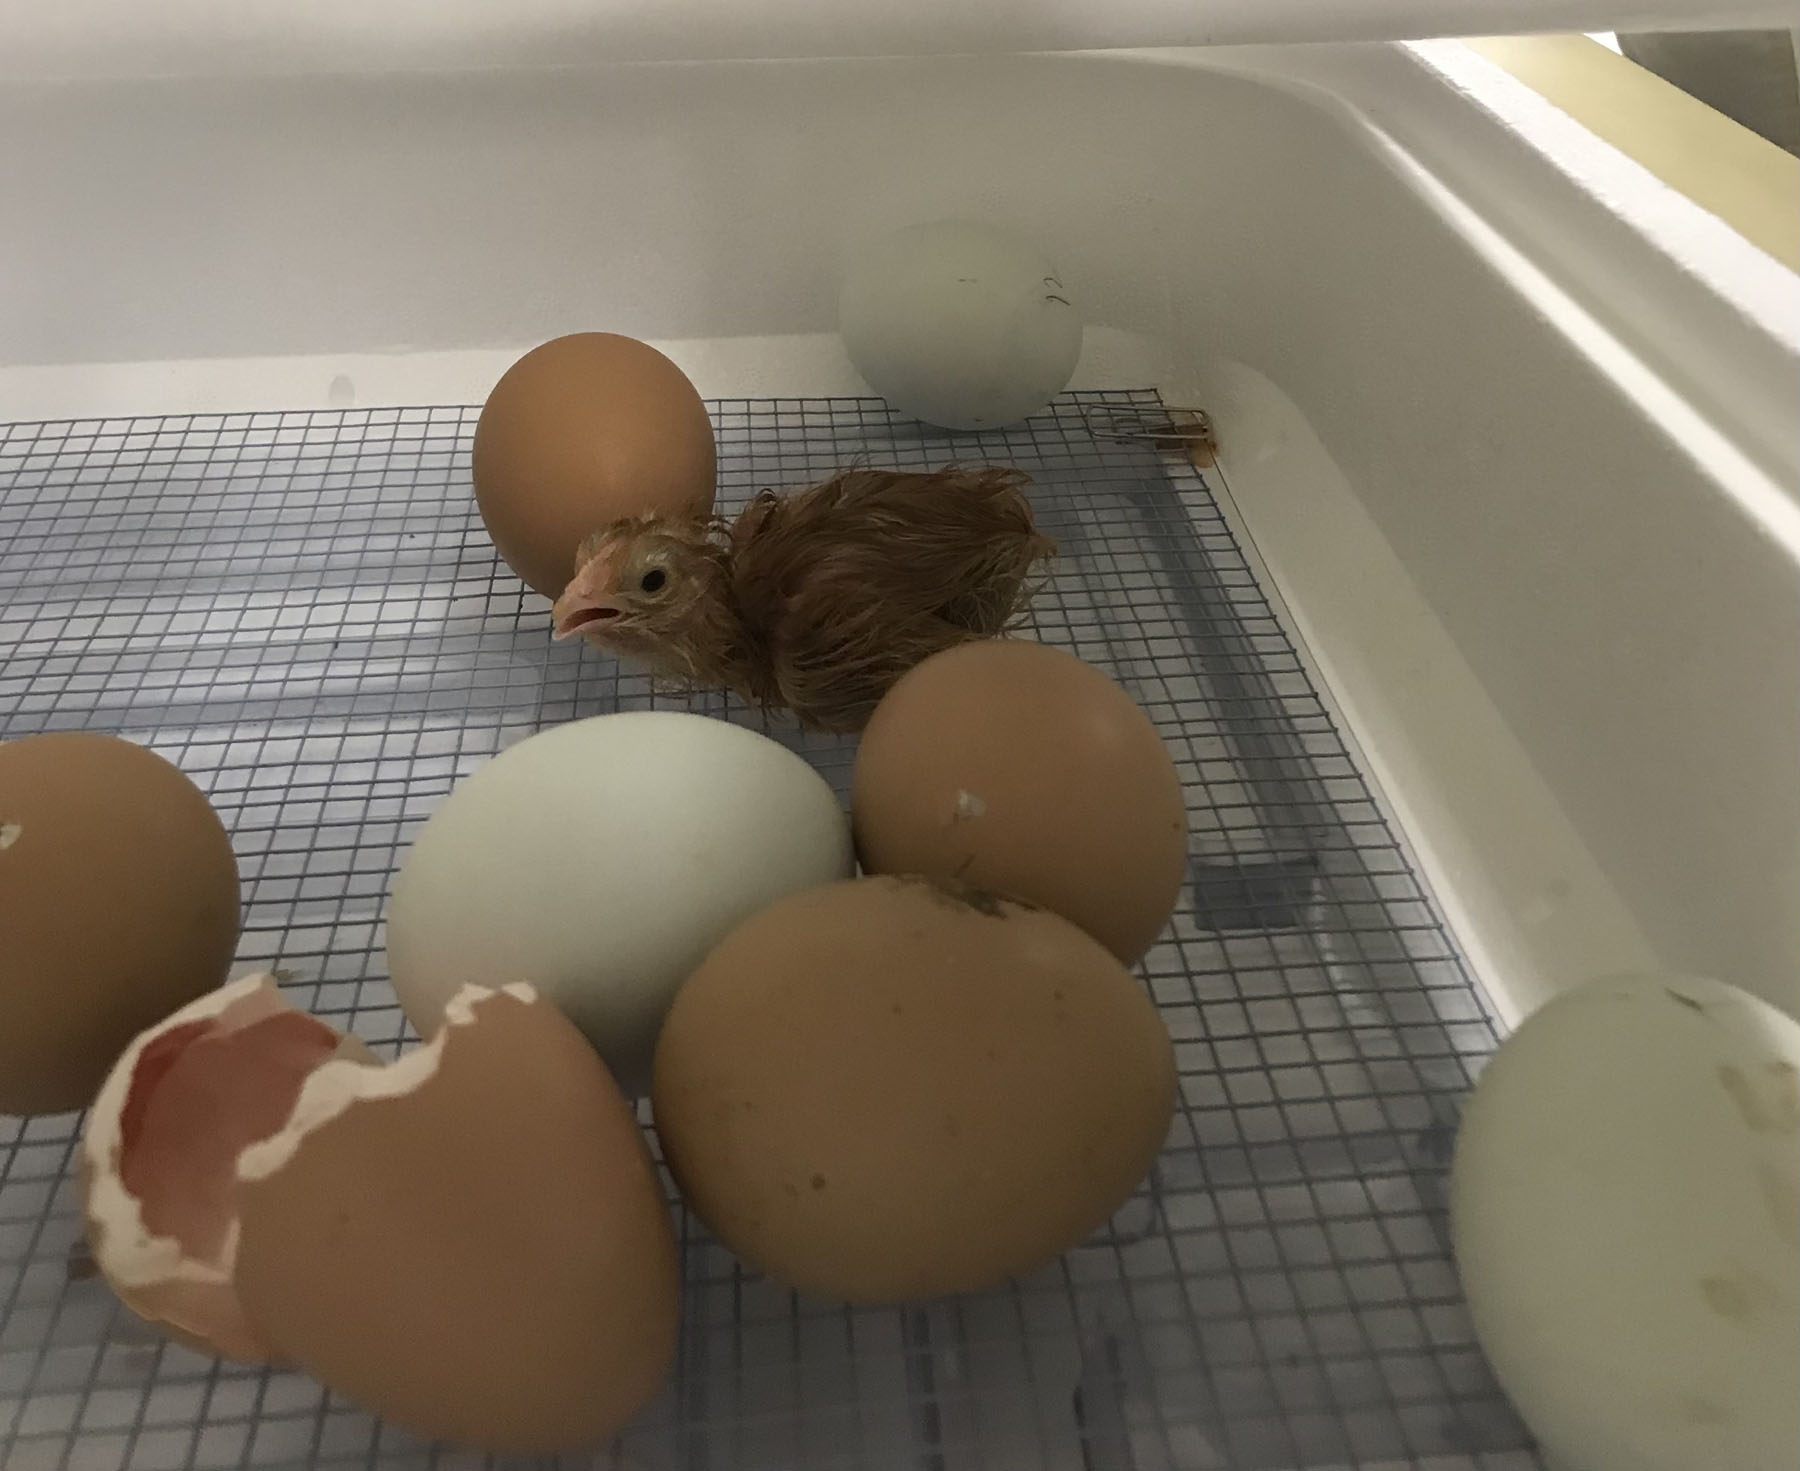 Baby chicks at Memorial School